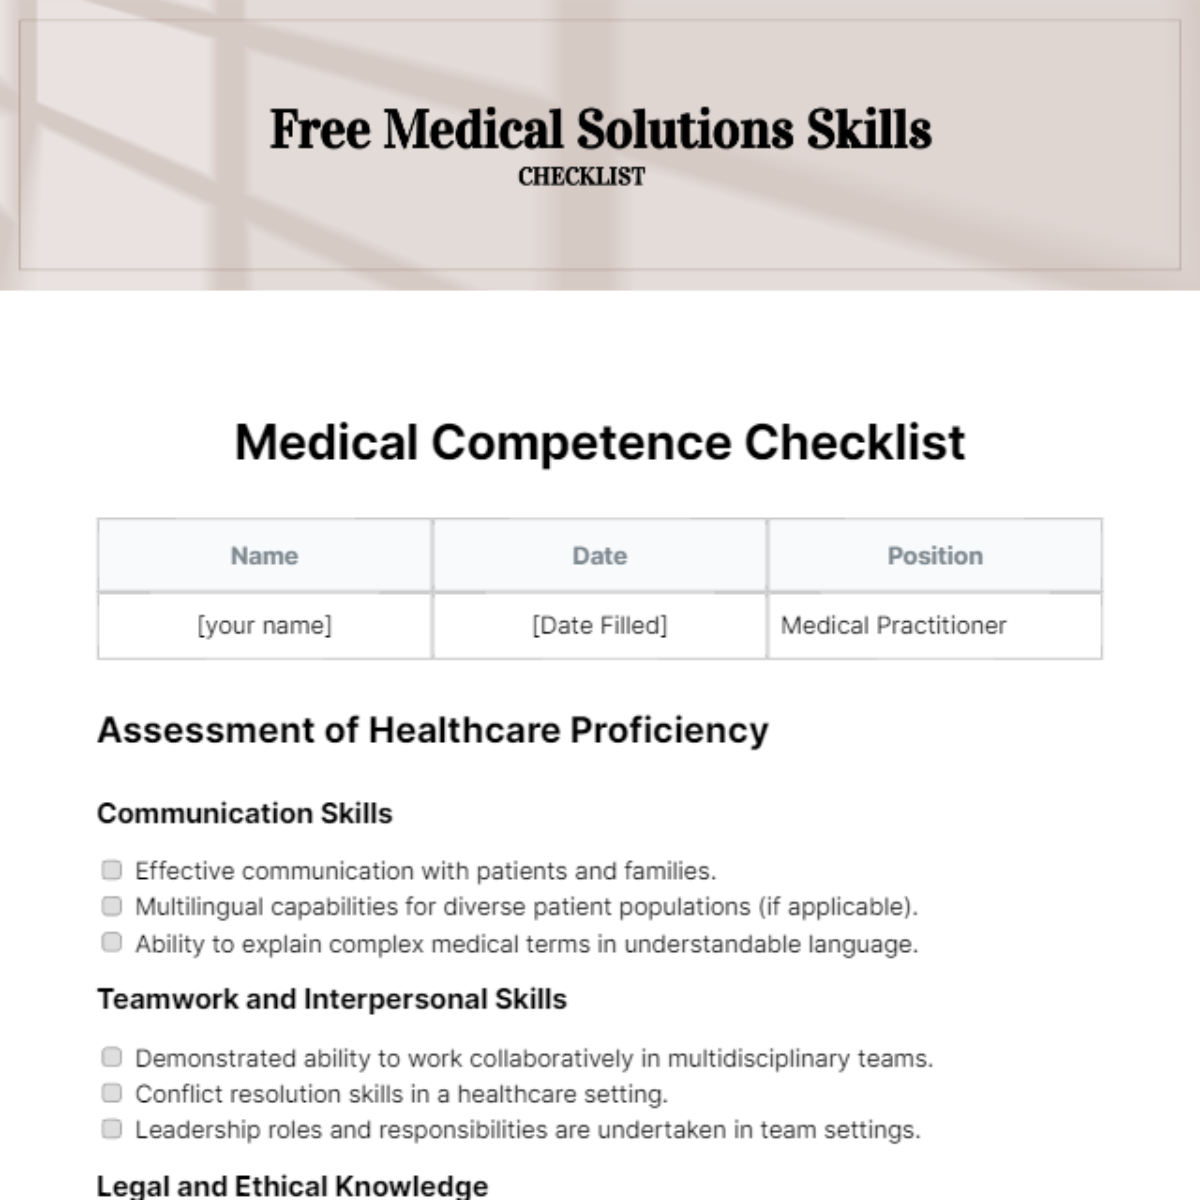 Medical Solutions Skills Checklist Template